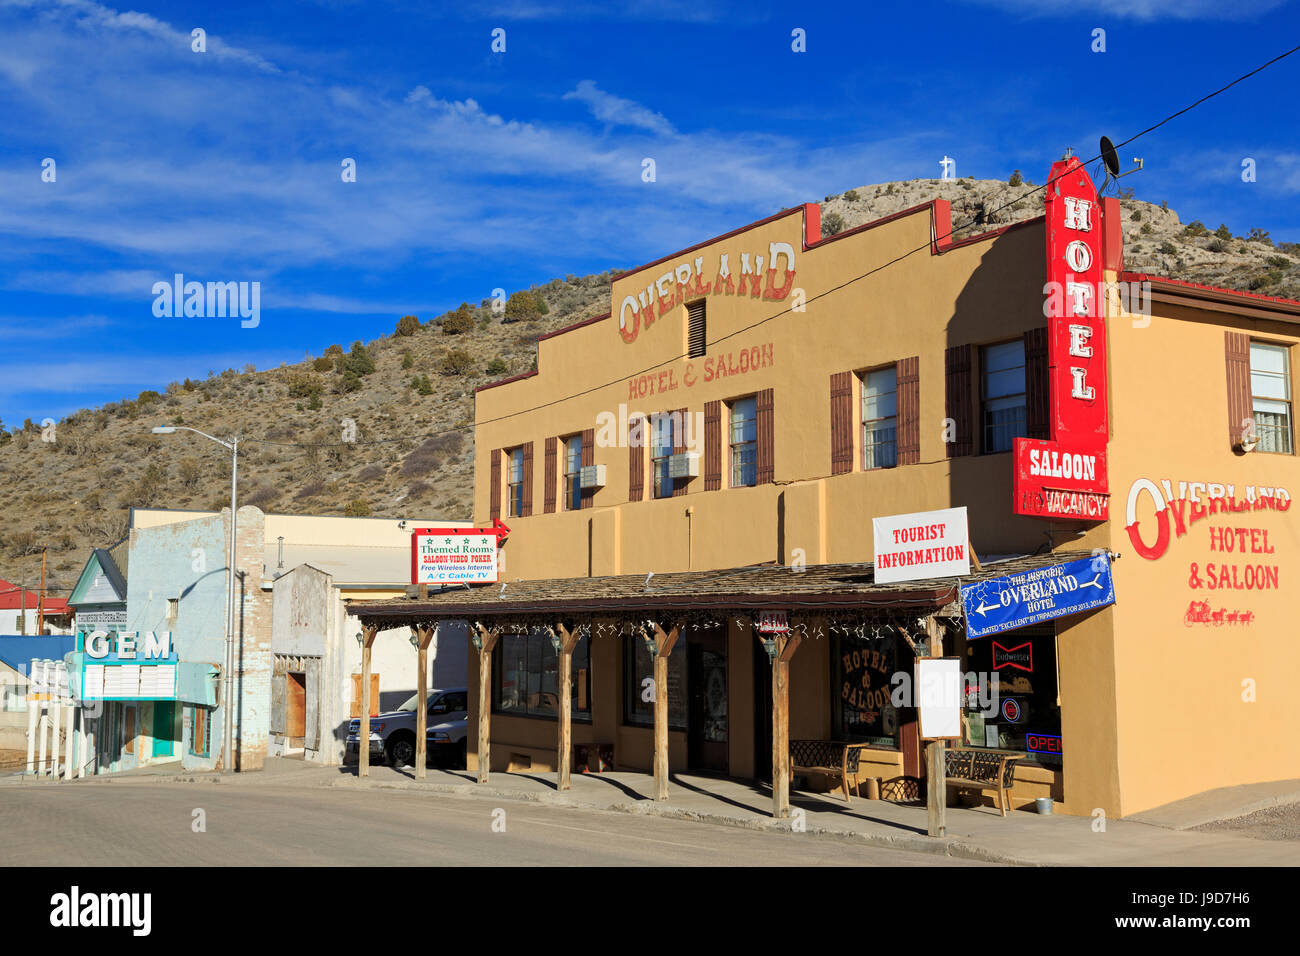 Overland-Hotel und Saloon, Pioche, Nevada, USA, Nordamerika Stockfoto